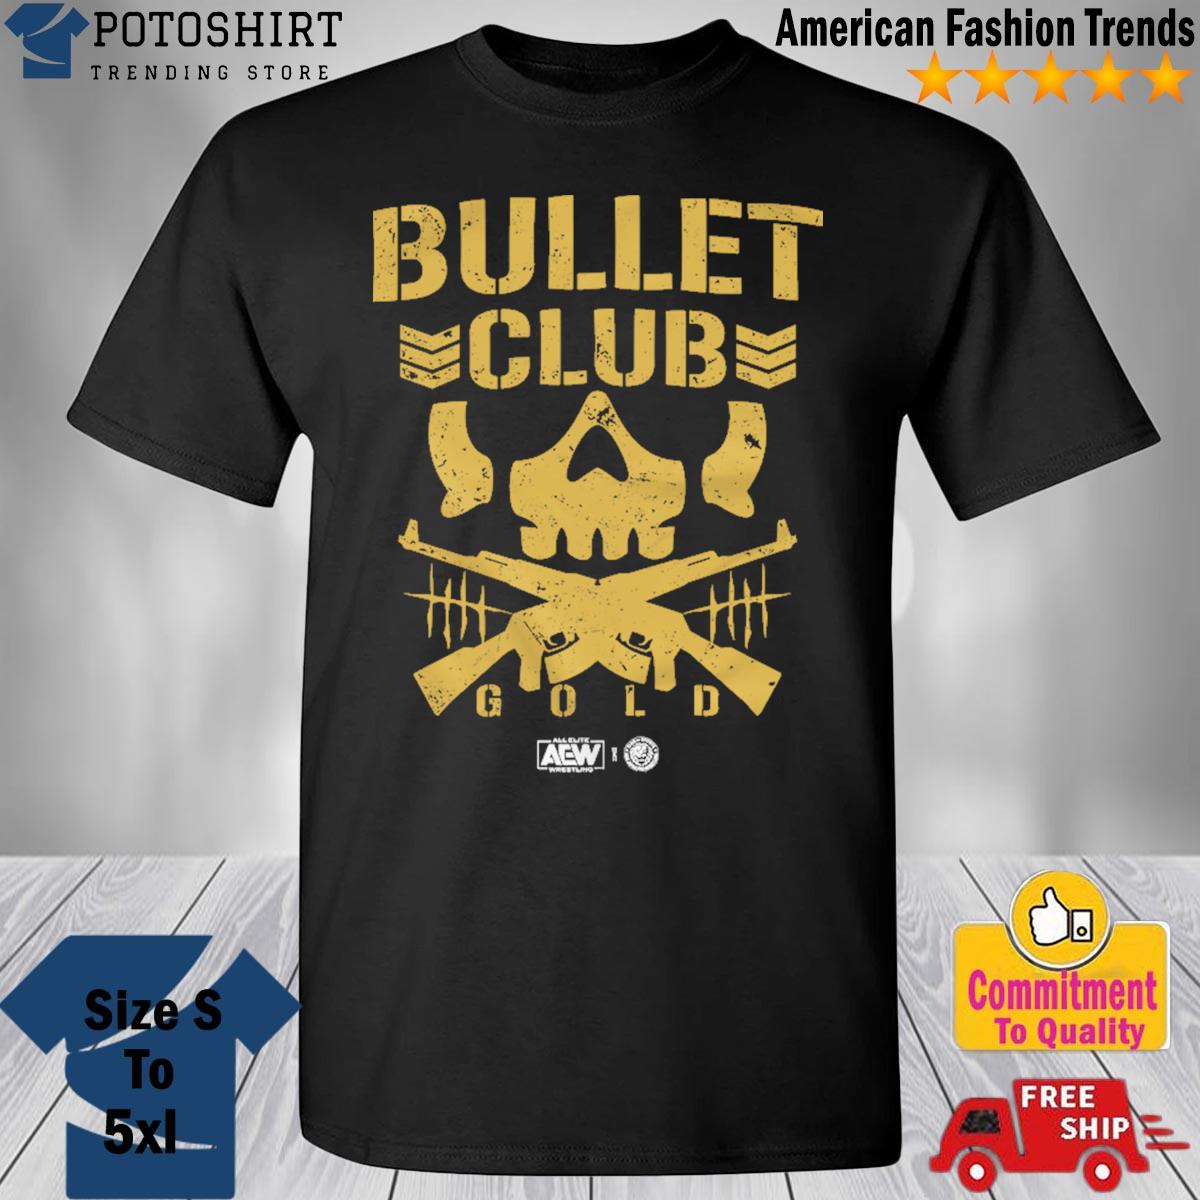 Pro Wrestling merch Bullet Club Gold